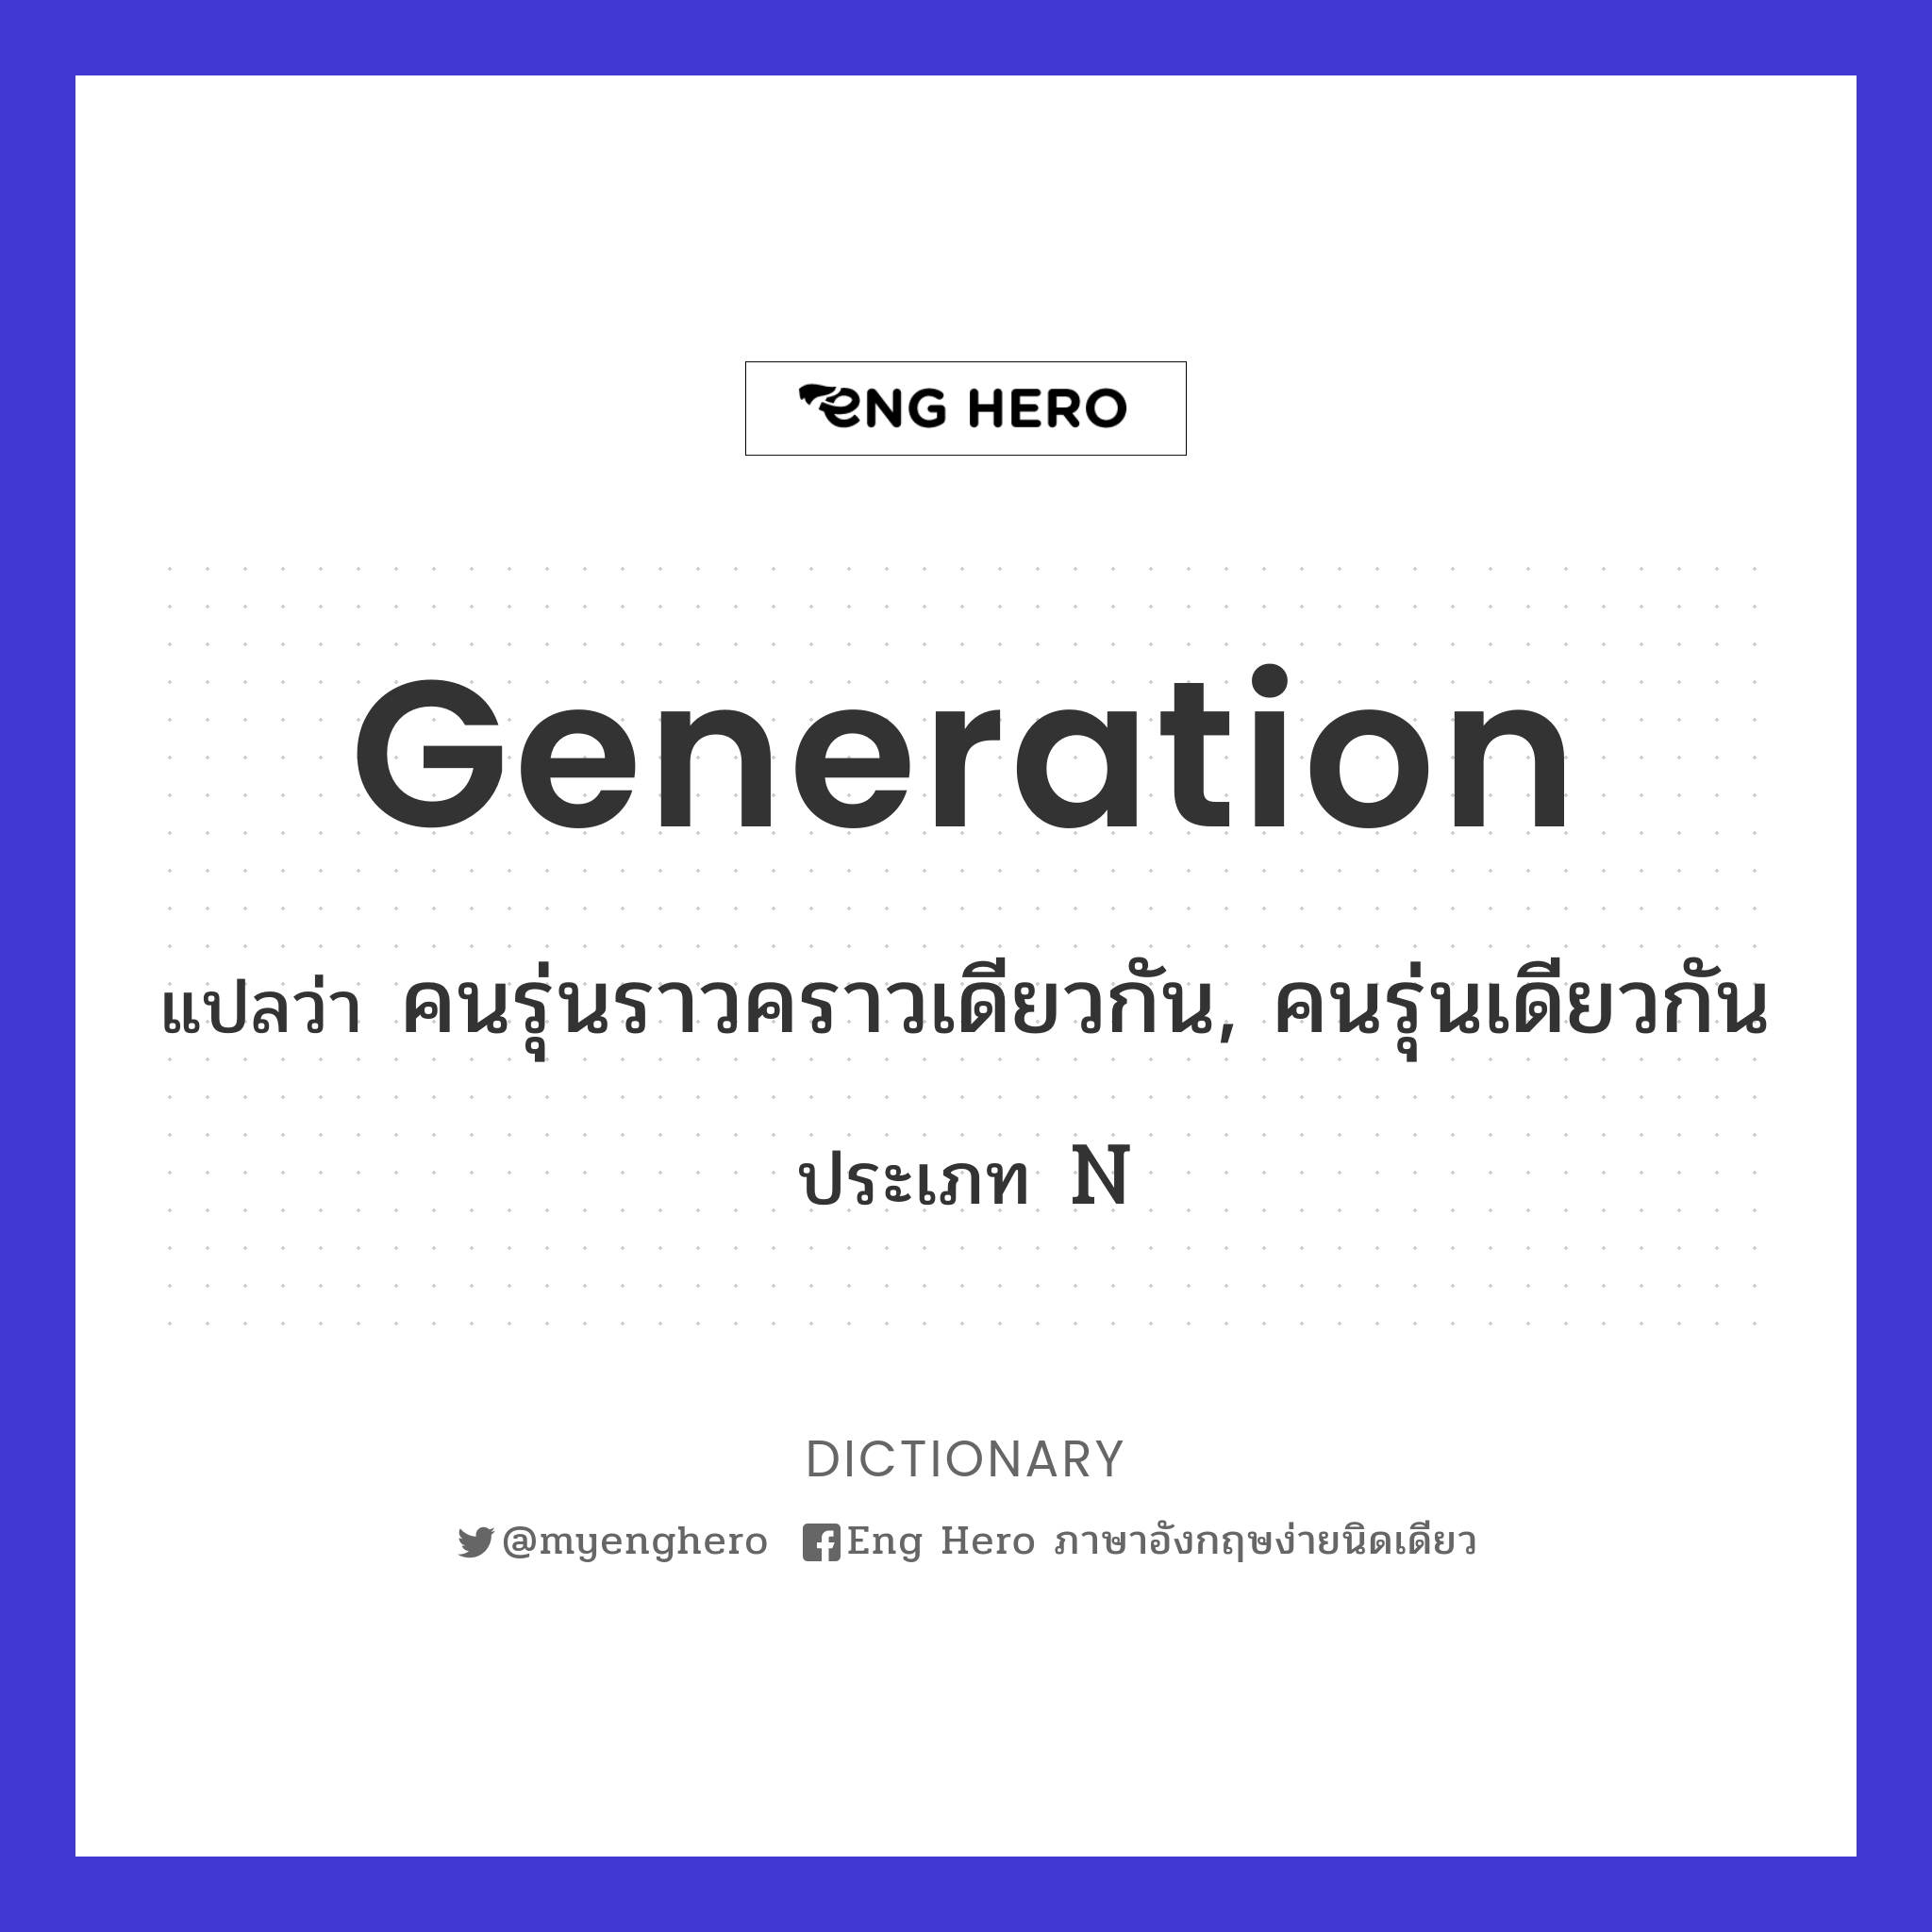 generation